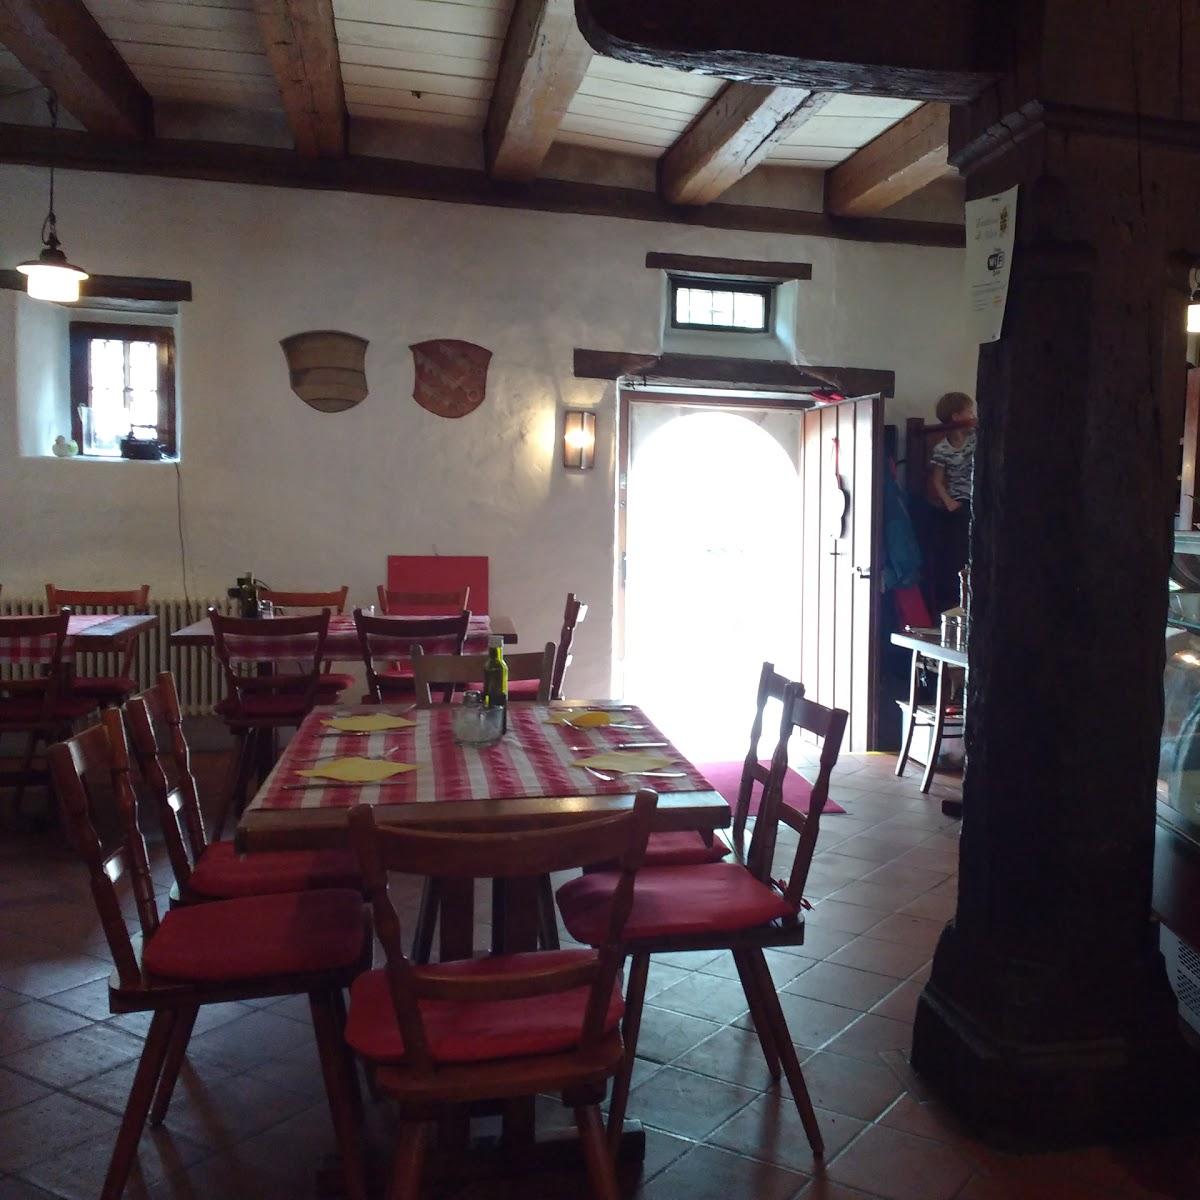 Restaurant "Trattoria 4Mori" in Rottenburg am Neckar